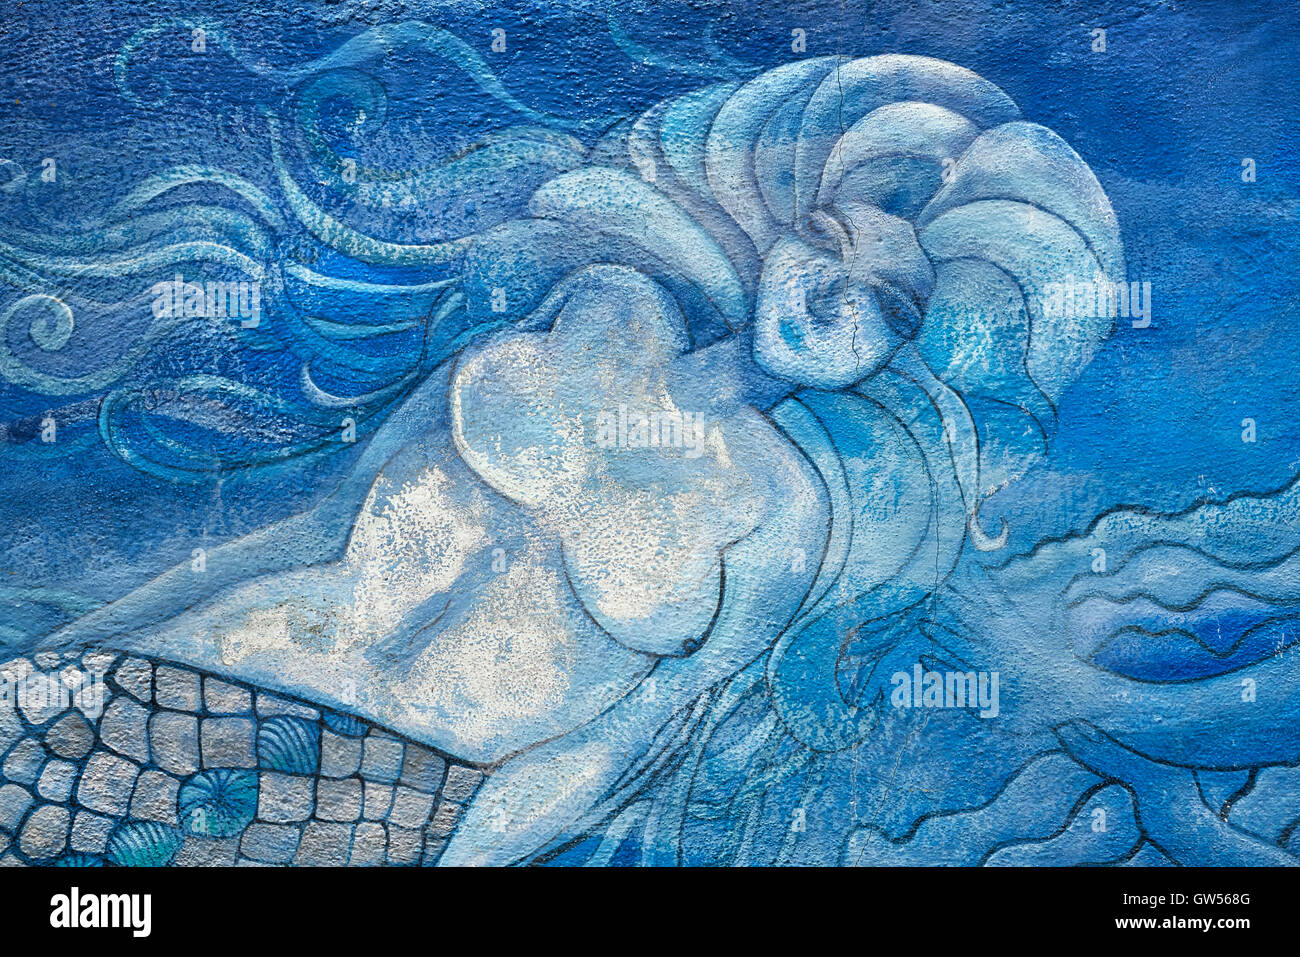 Wandmalereien von Meerjungfrauen und Meerestieren entlang der Küste in Puerto Ayora in den Galapagos-Inseln von Ecuador Stockfoto